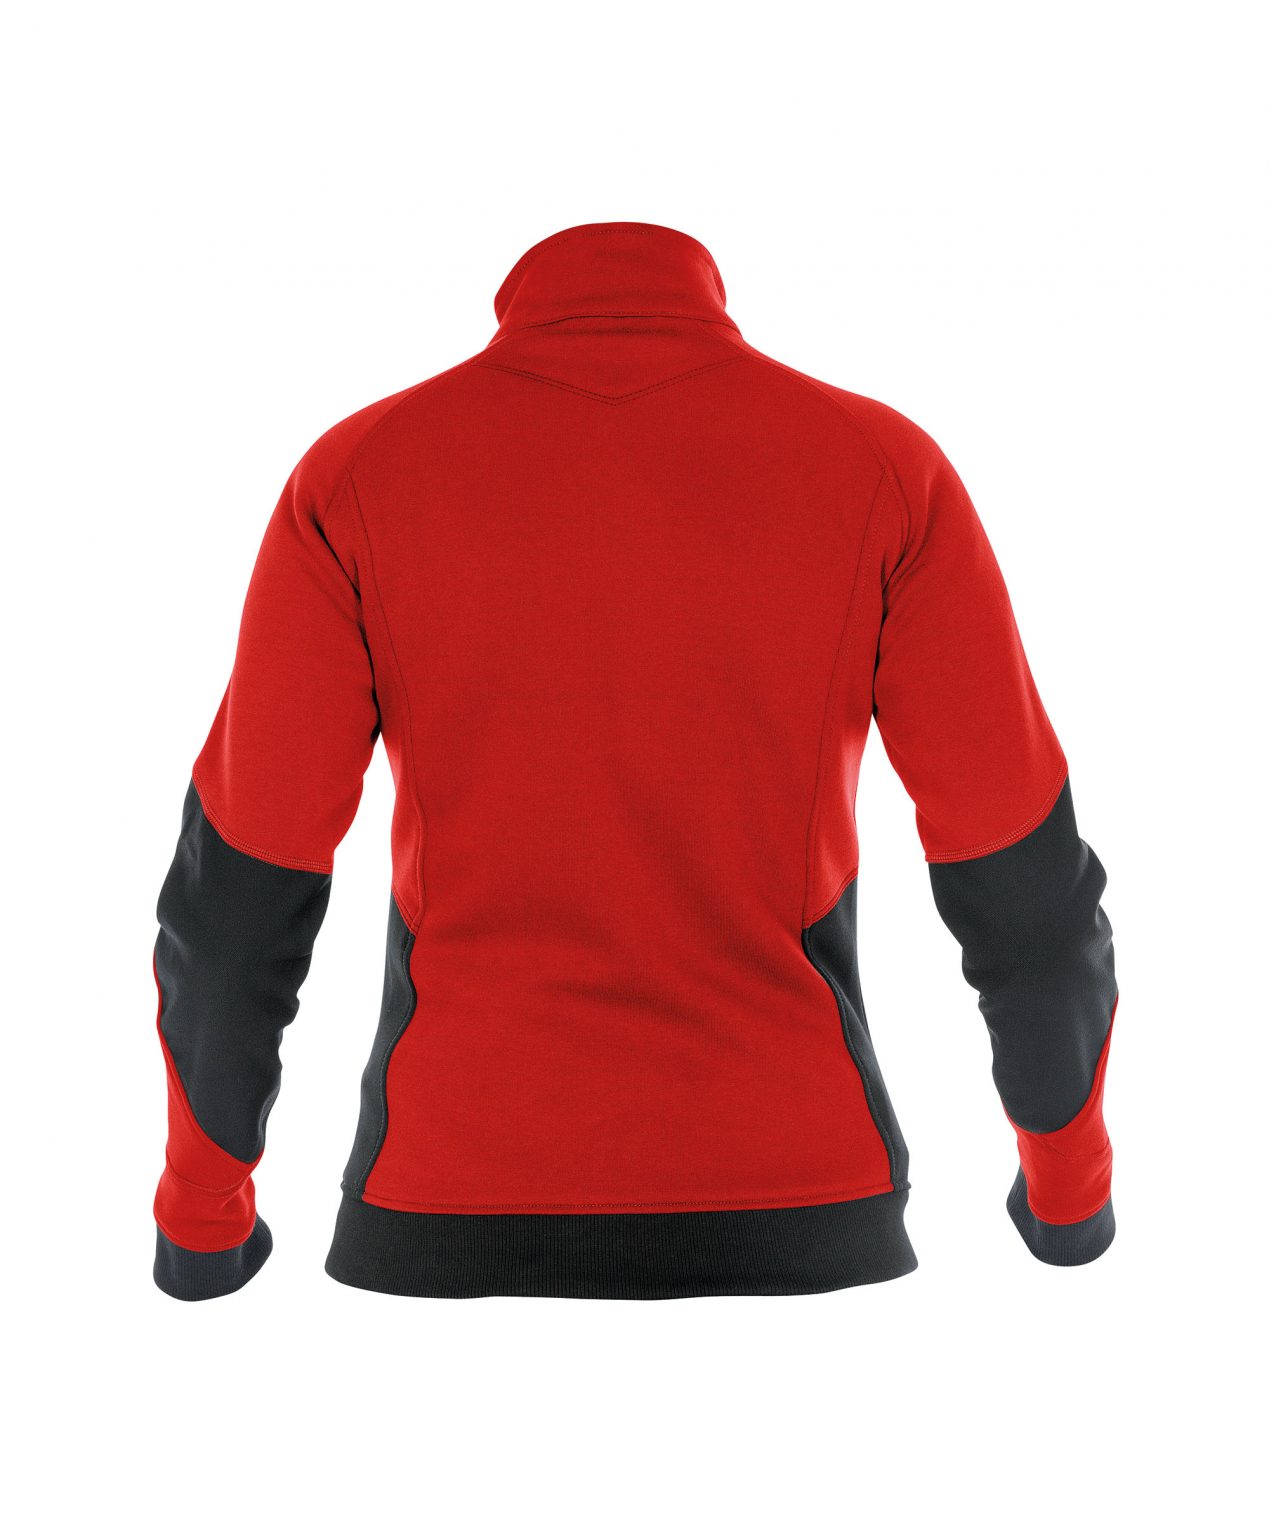 velox women sweatshirt red black back